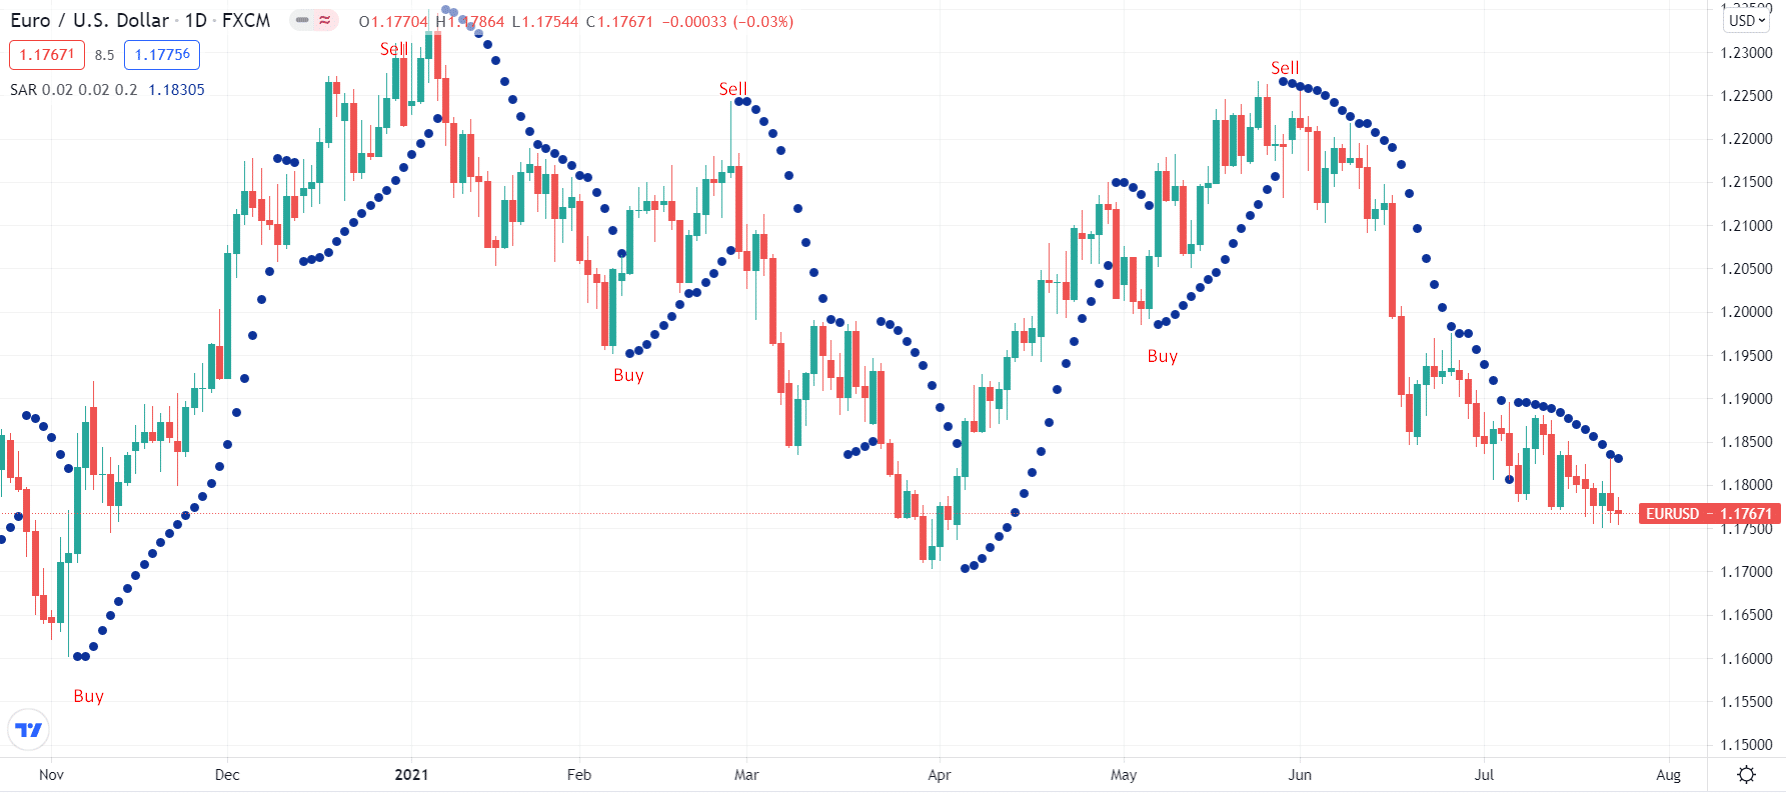 EURO/USDollar_1D chart